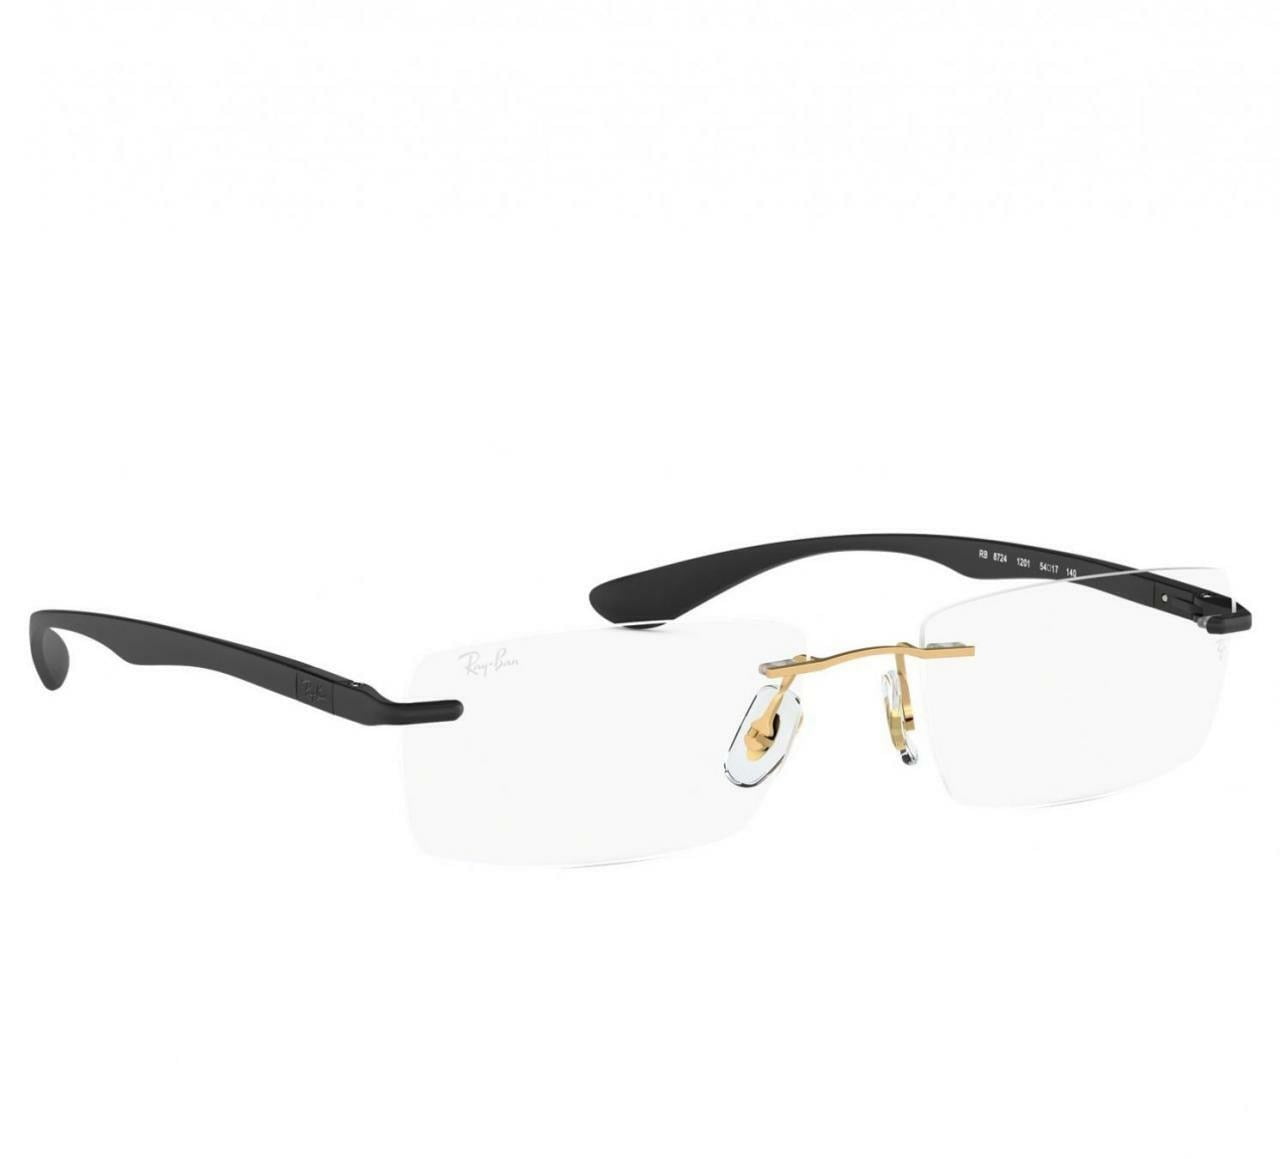 Typical rice order Ray-Ban RB8724-1201 Black Rimless Rectangular Metal Eyeglasses Frames -  Walmart.com